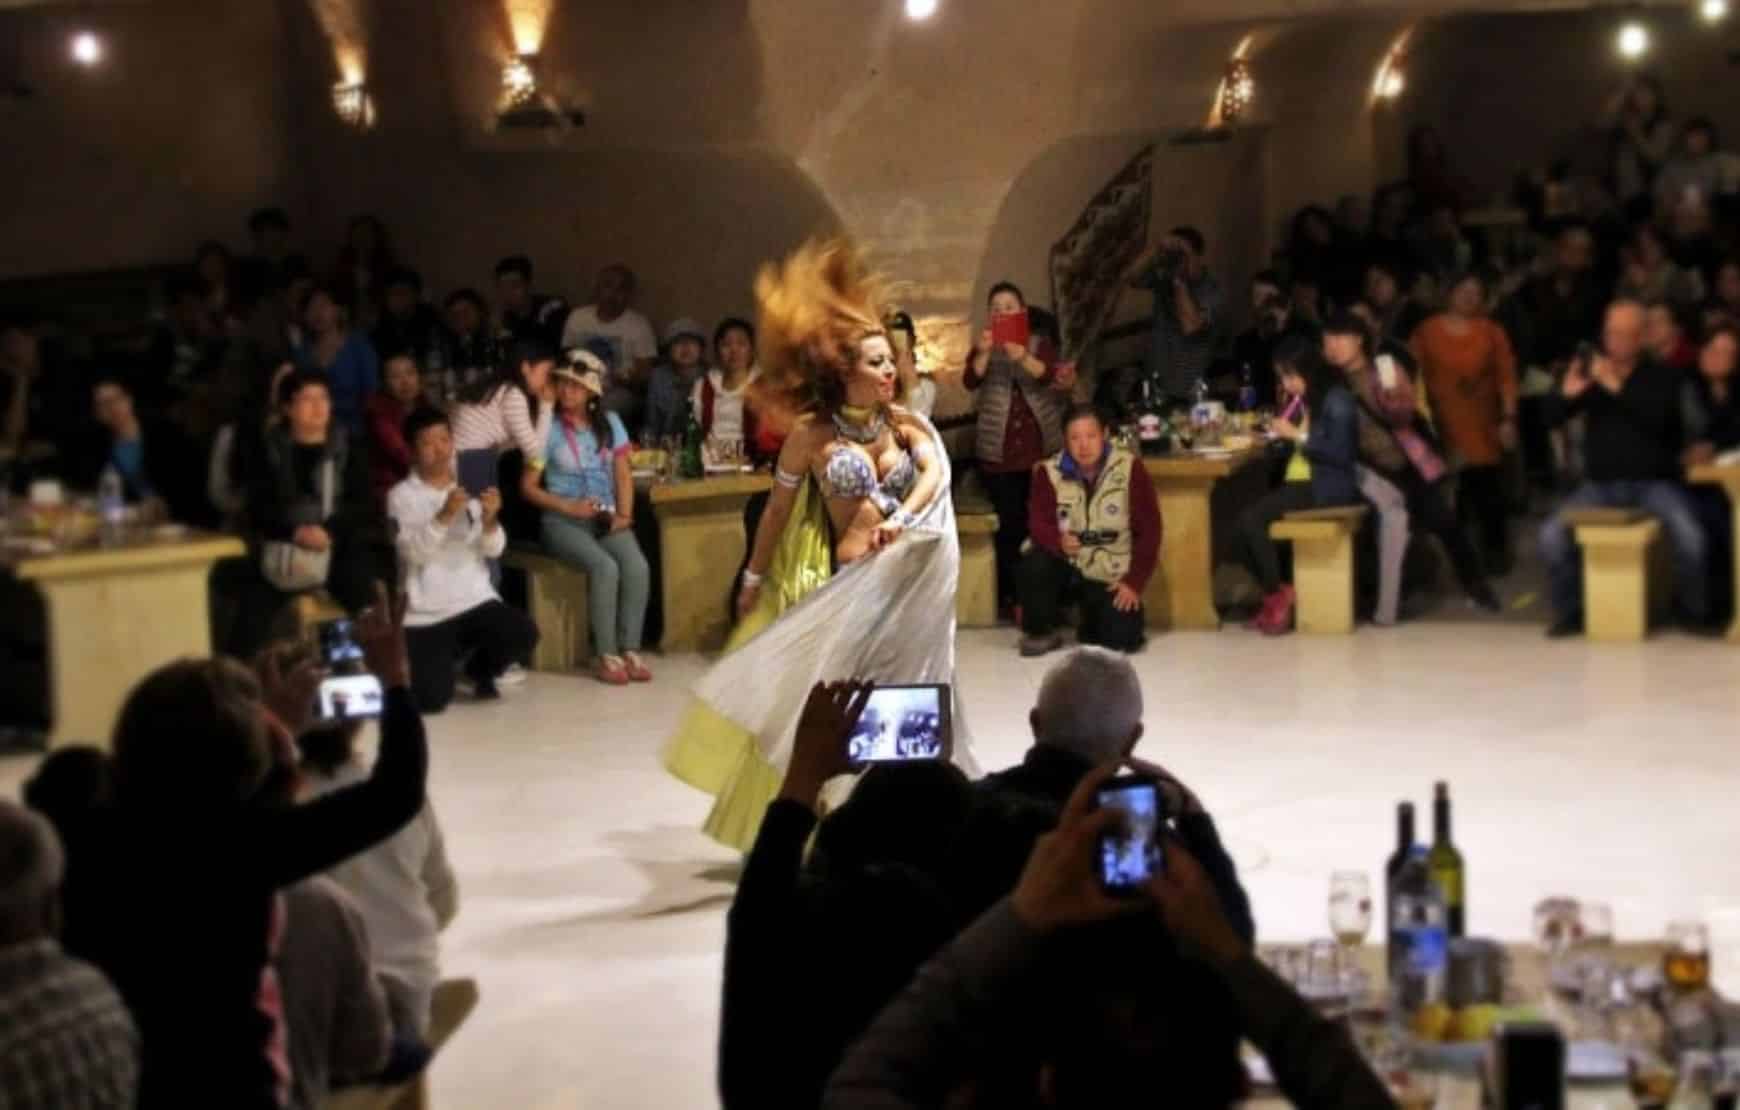 Turkish Night Show in Cappadocia - turkish belley dancer on the stage.